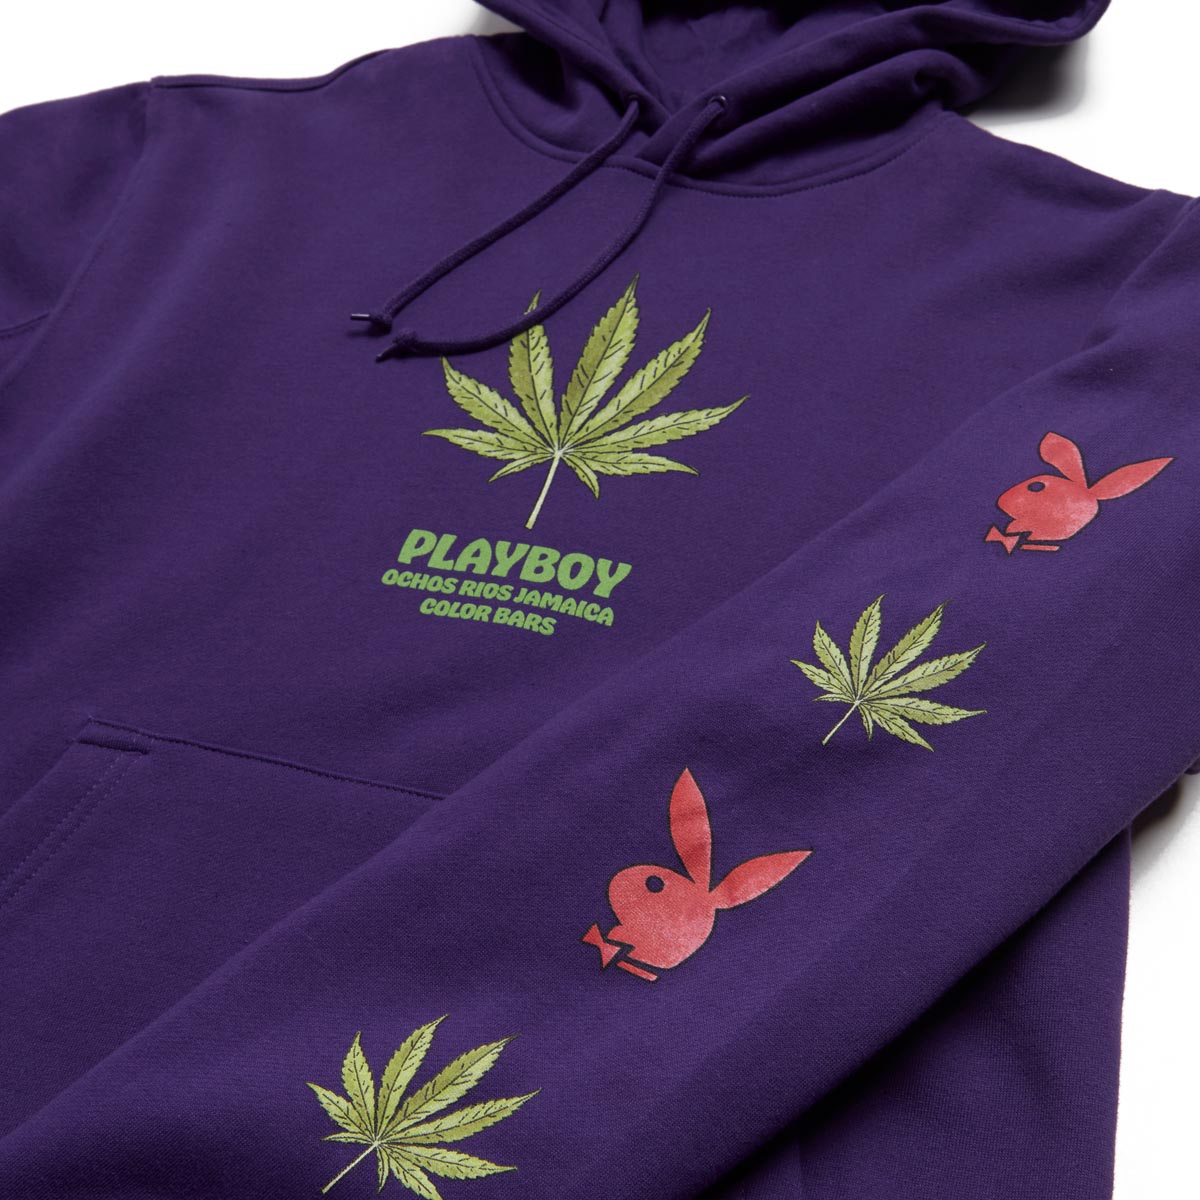 Color Bars x Playboy Jamaica Plant Hoodie - Purple image 2